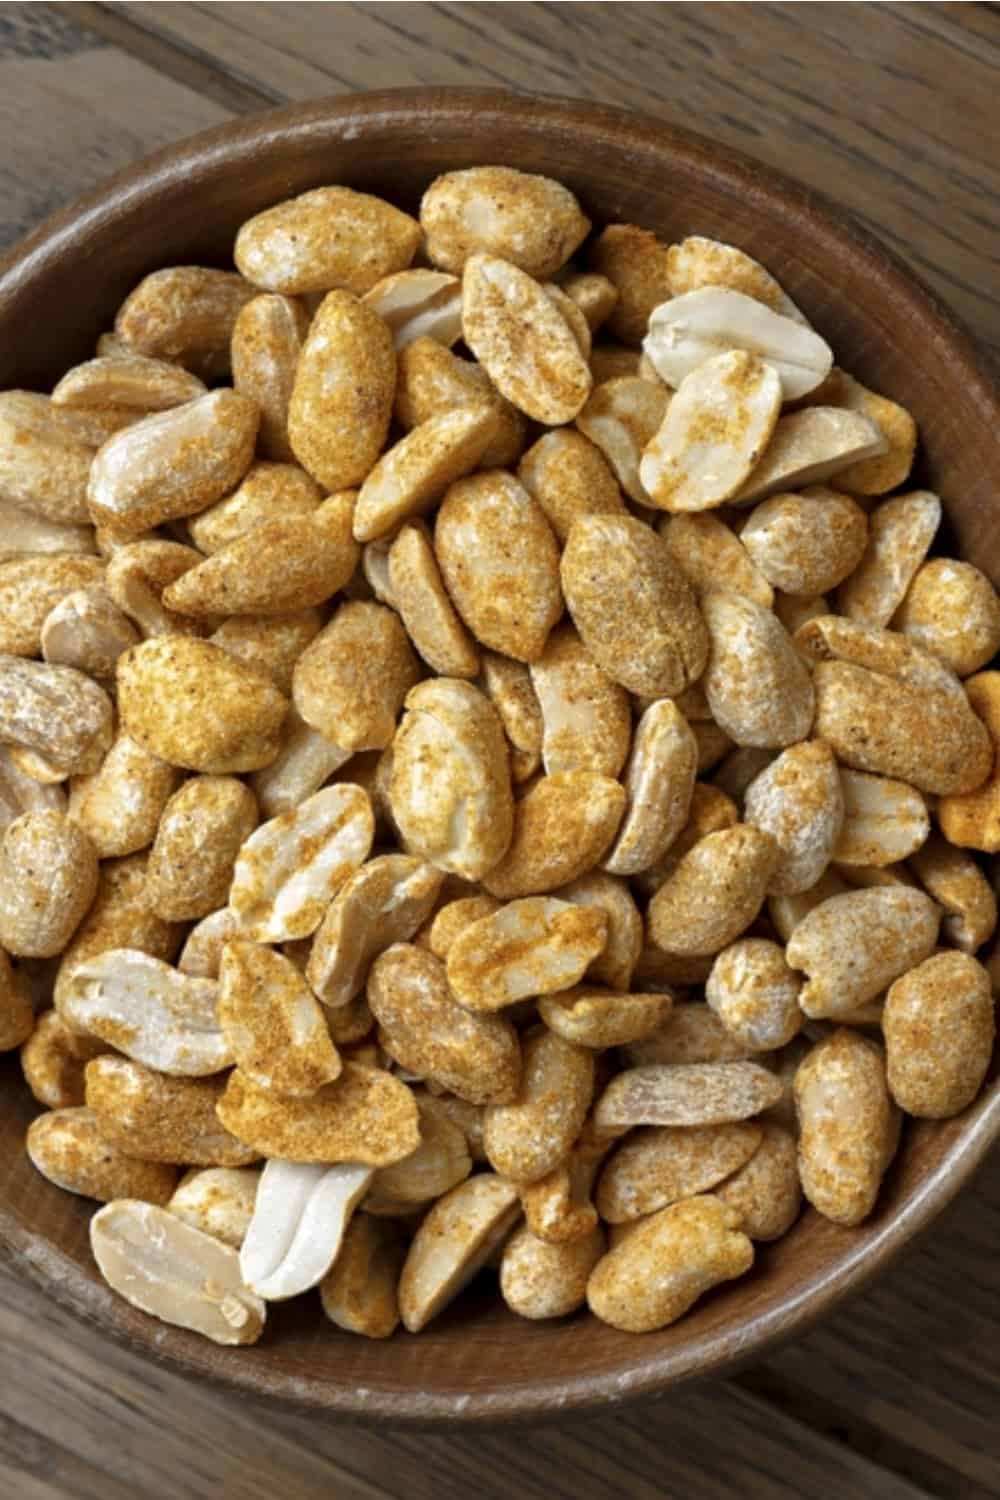 peanuts in a brown bowl